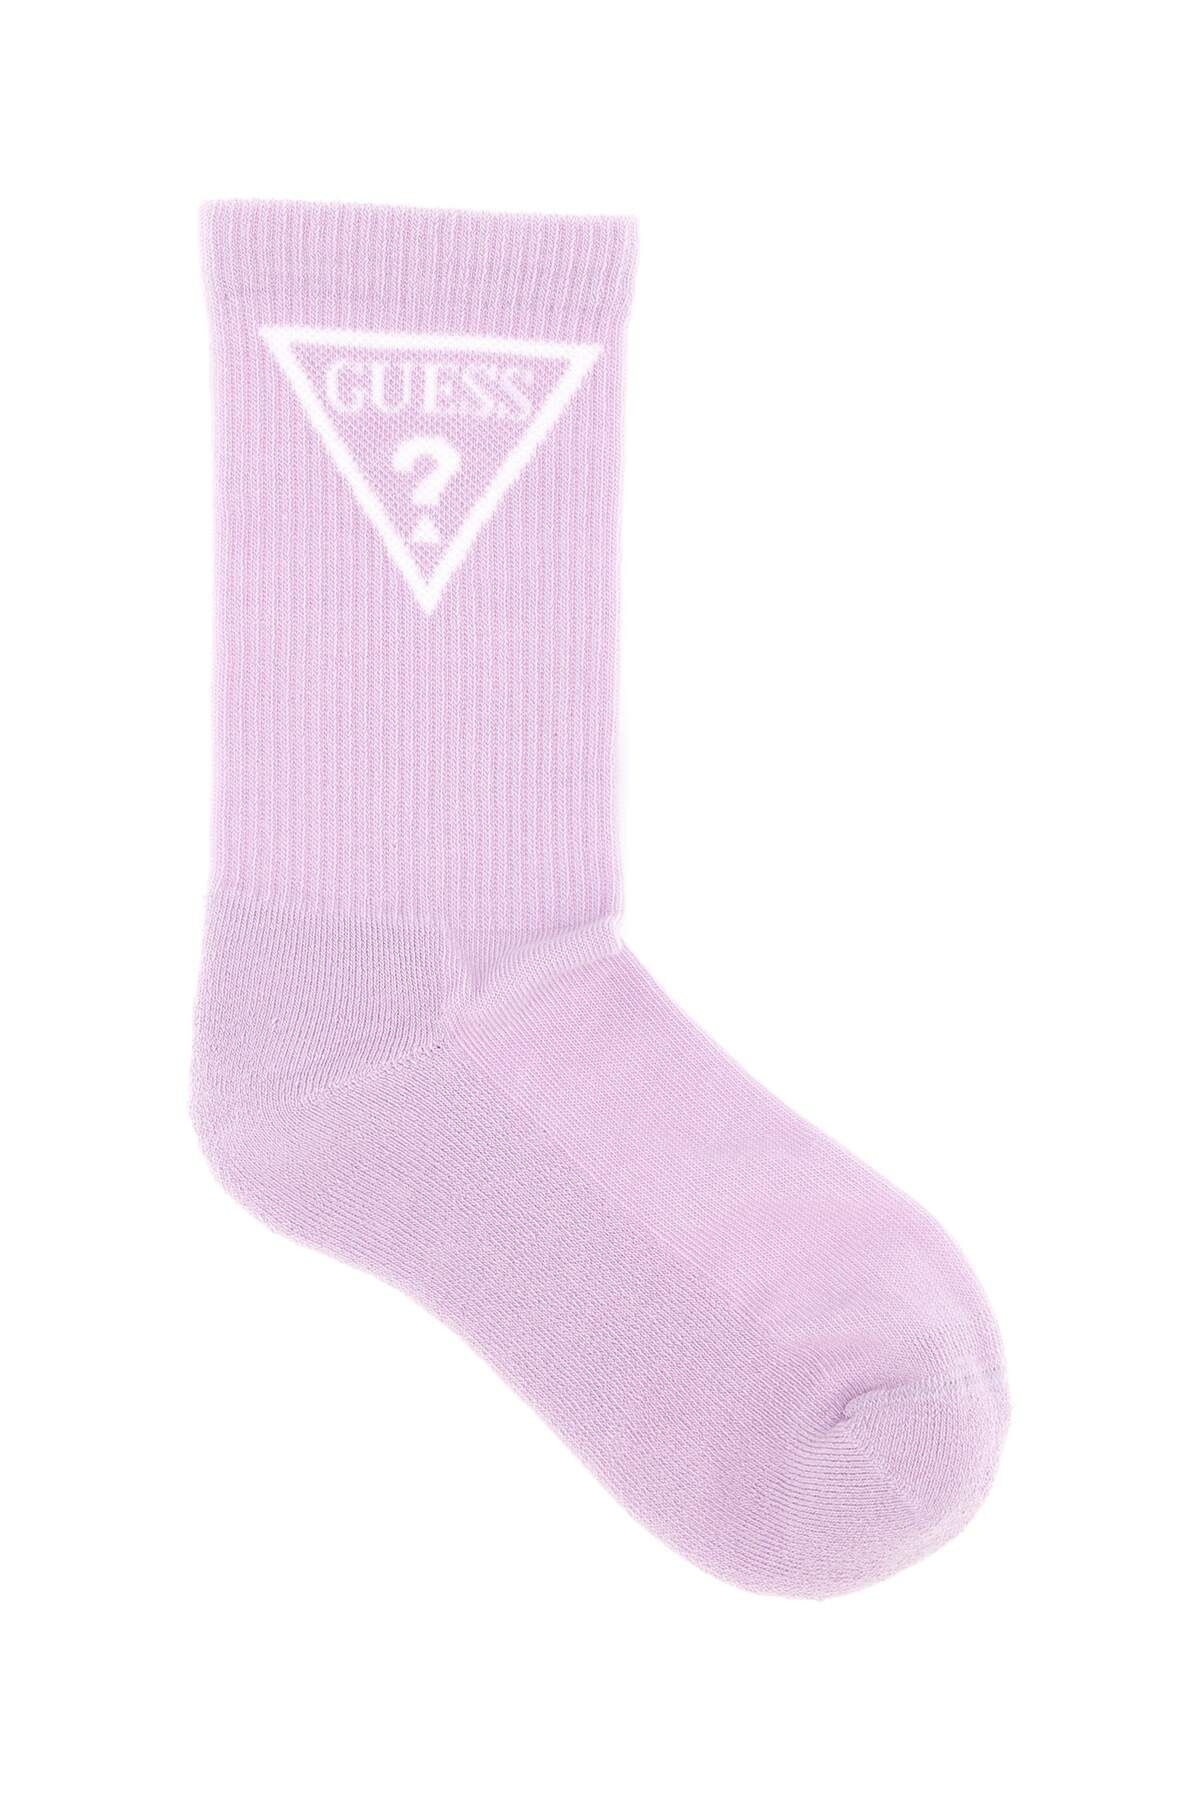 Guess Ellen Kadın Aktif Çorap